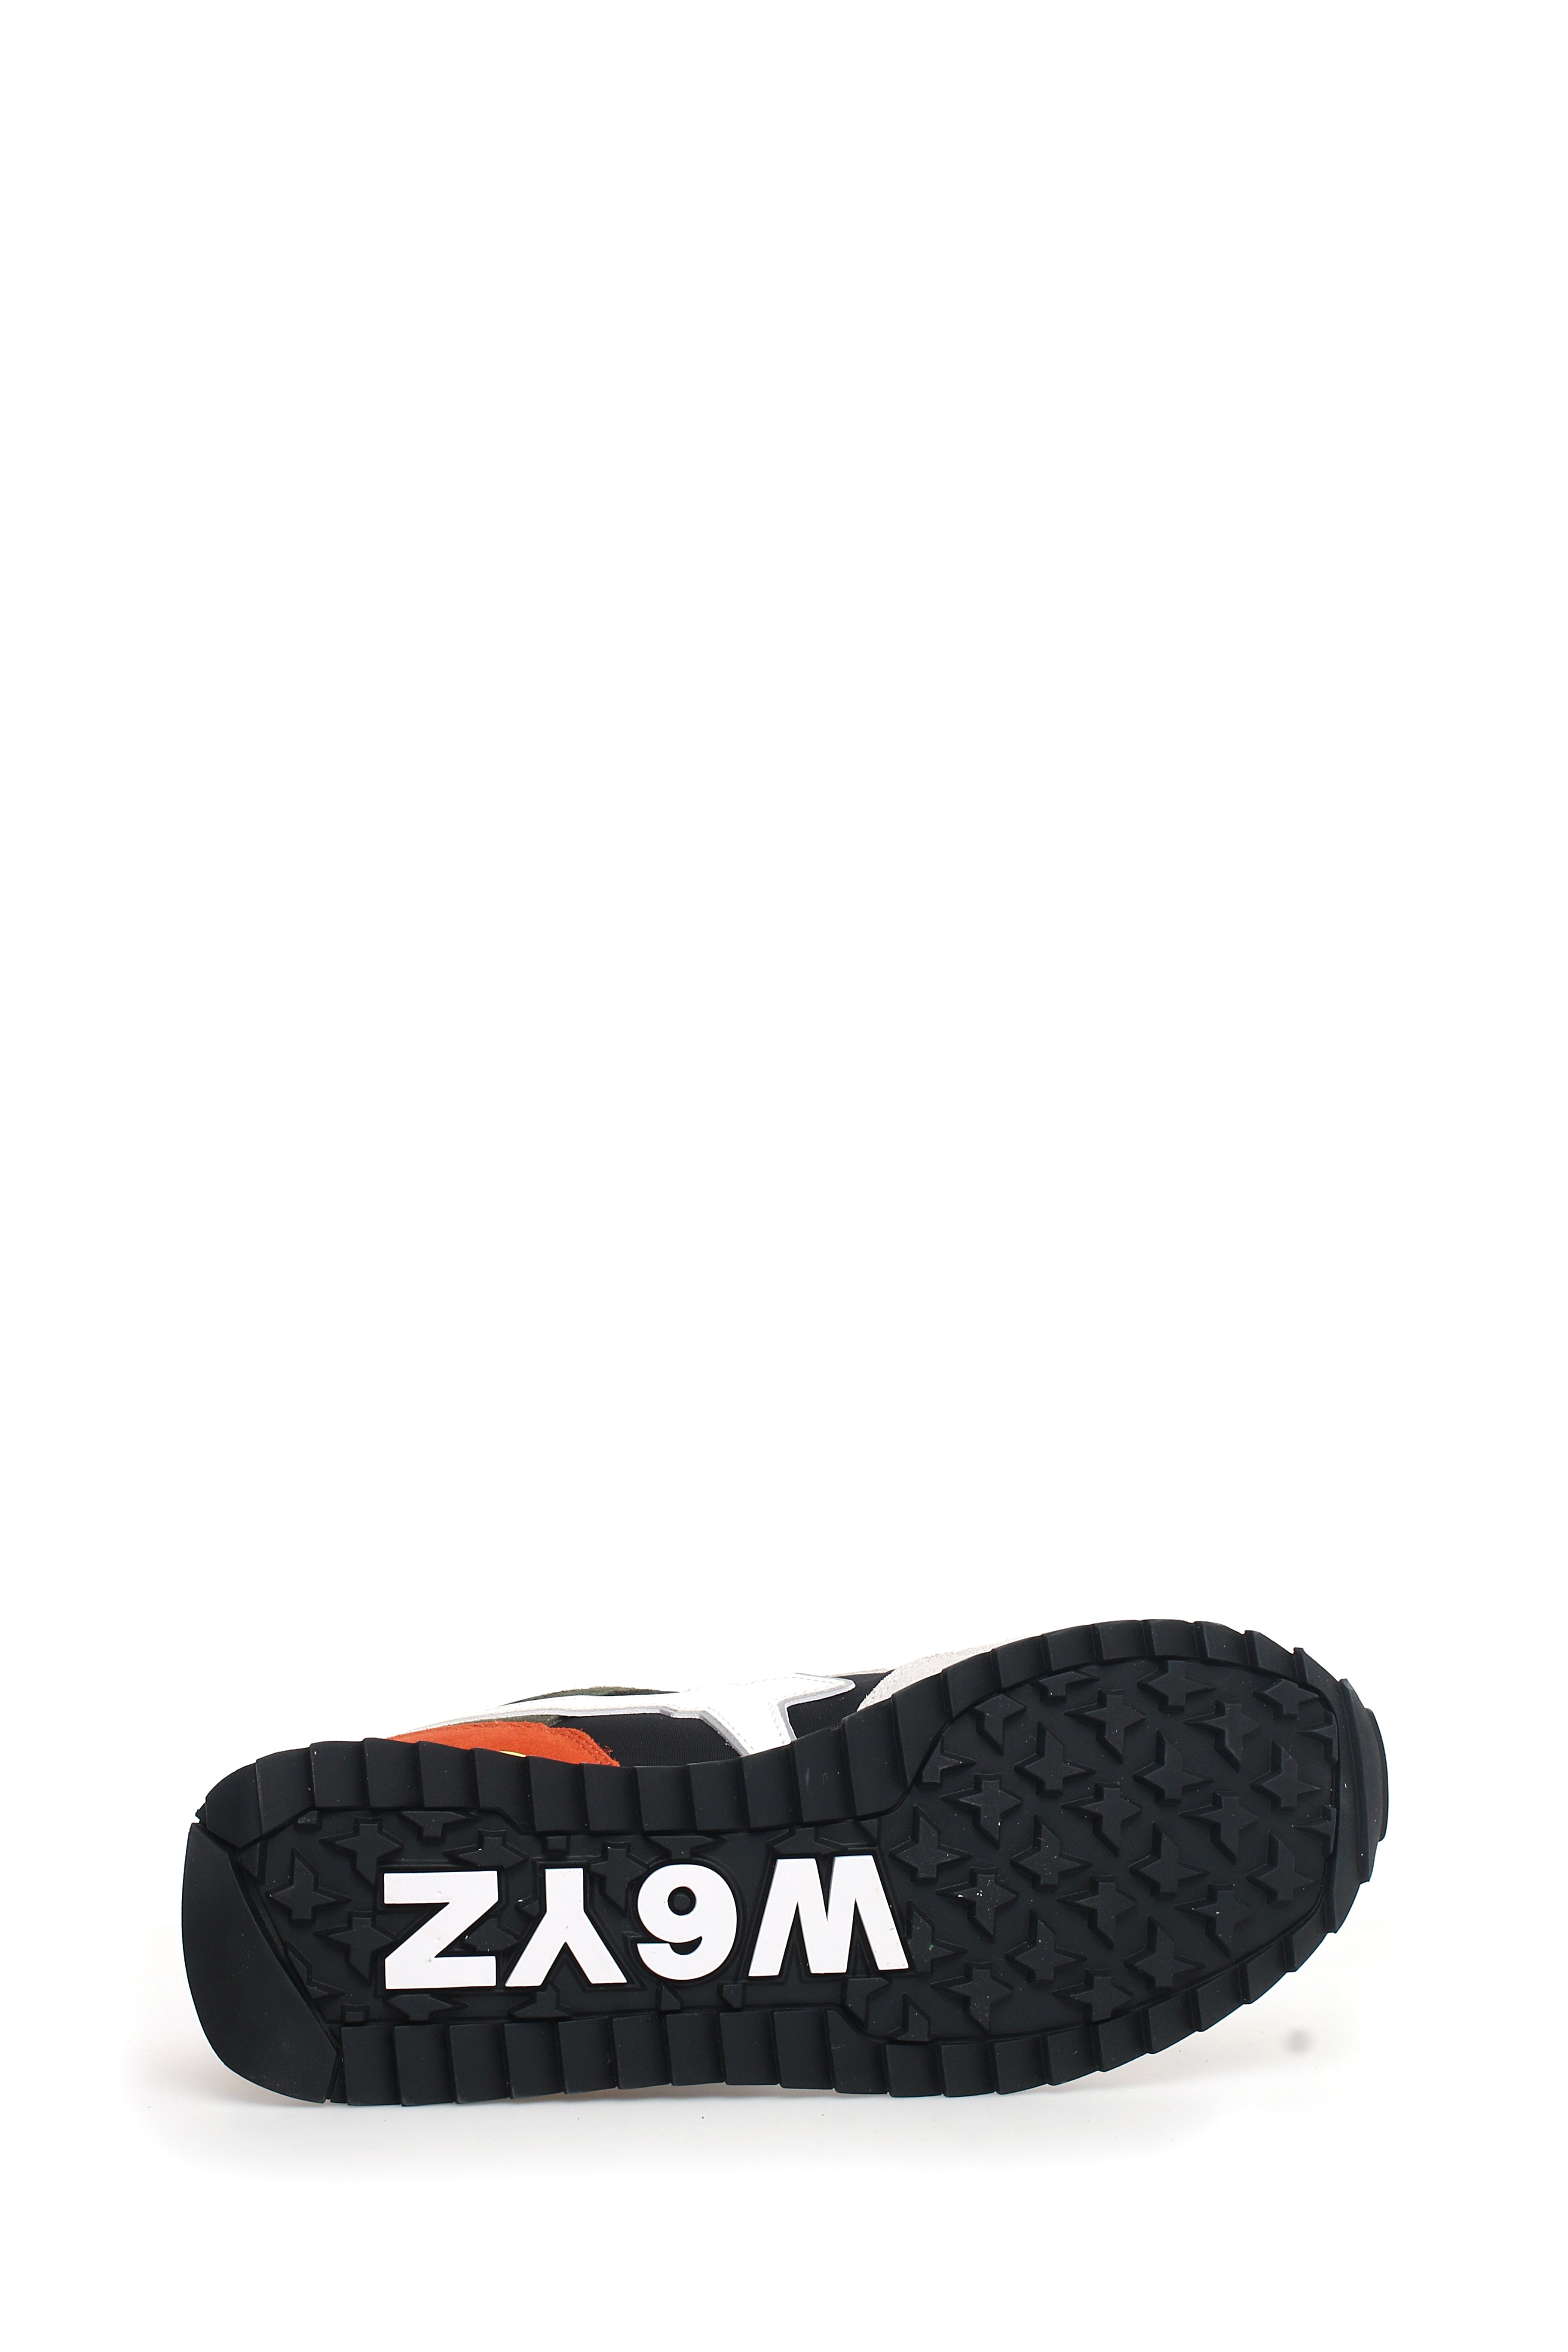 W6YZ-Sneaker Uomo Yak M-White Black Military Orange